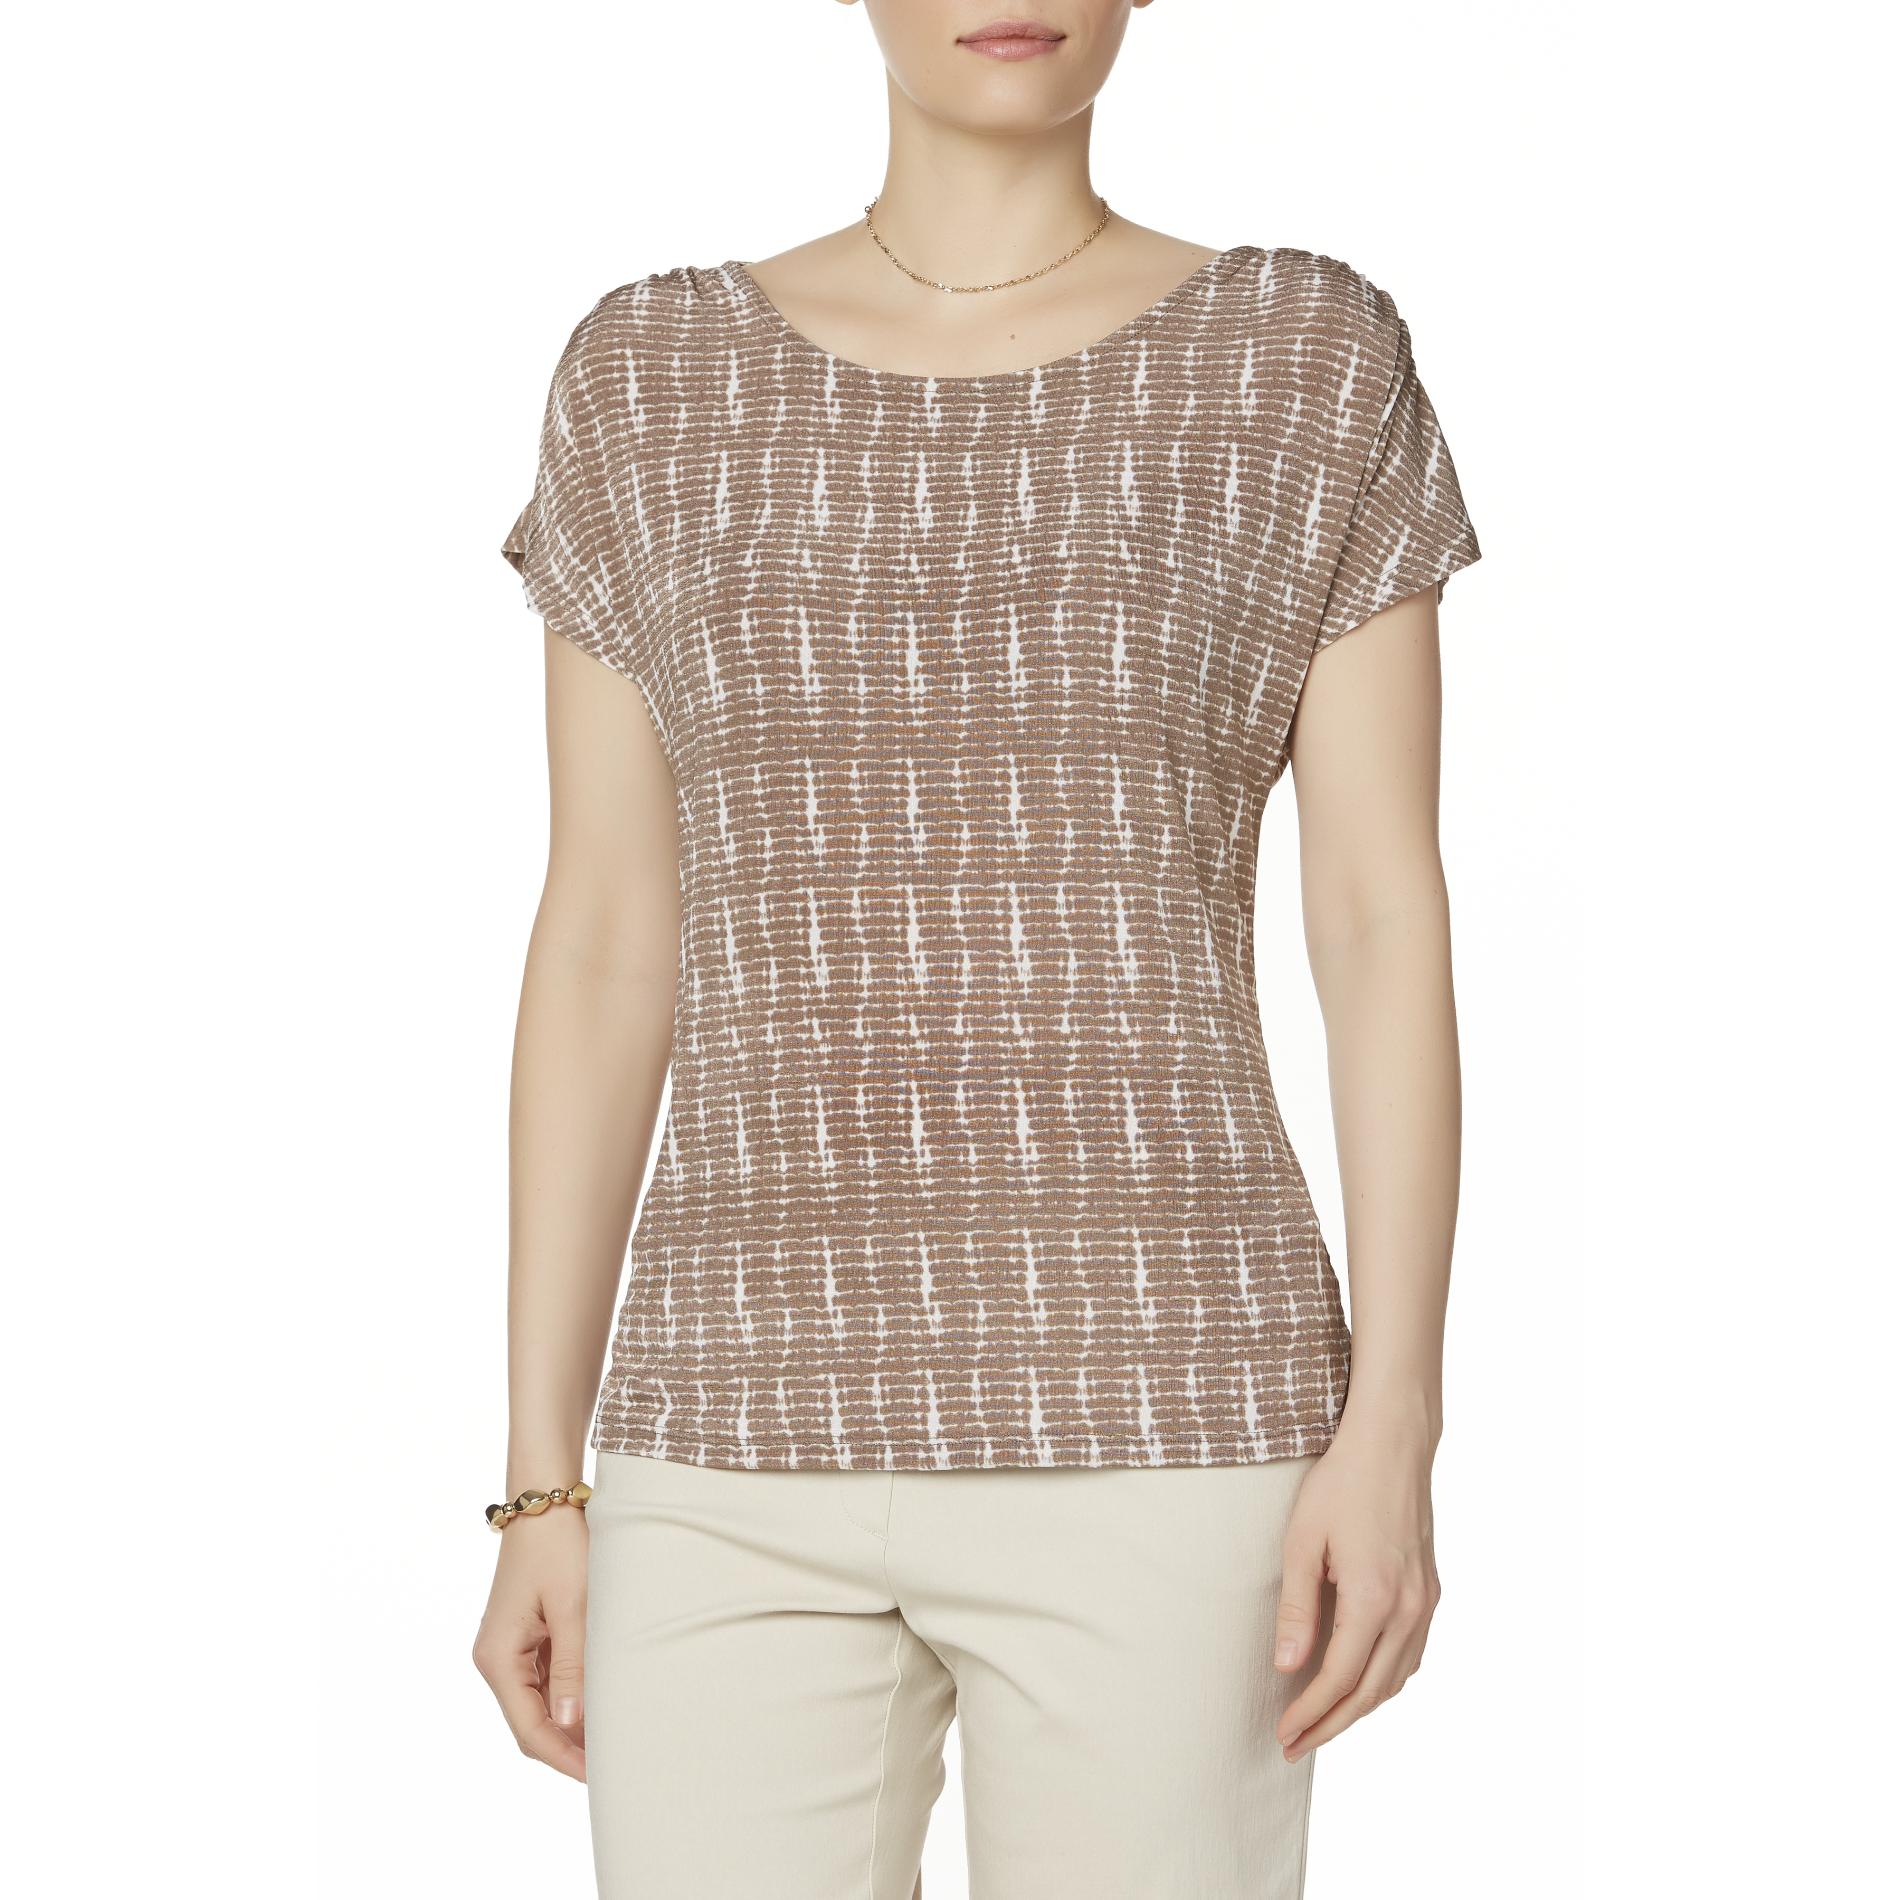 Jaclyn Smith Women's Shirred T-Shirt - Snakeskin Print